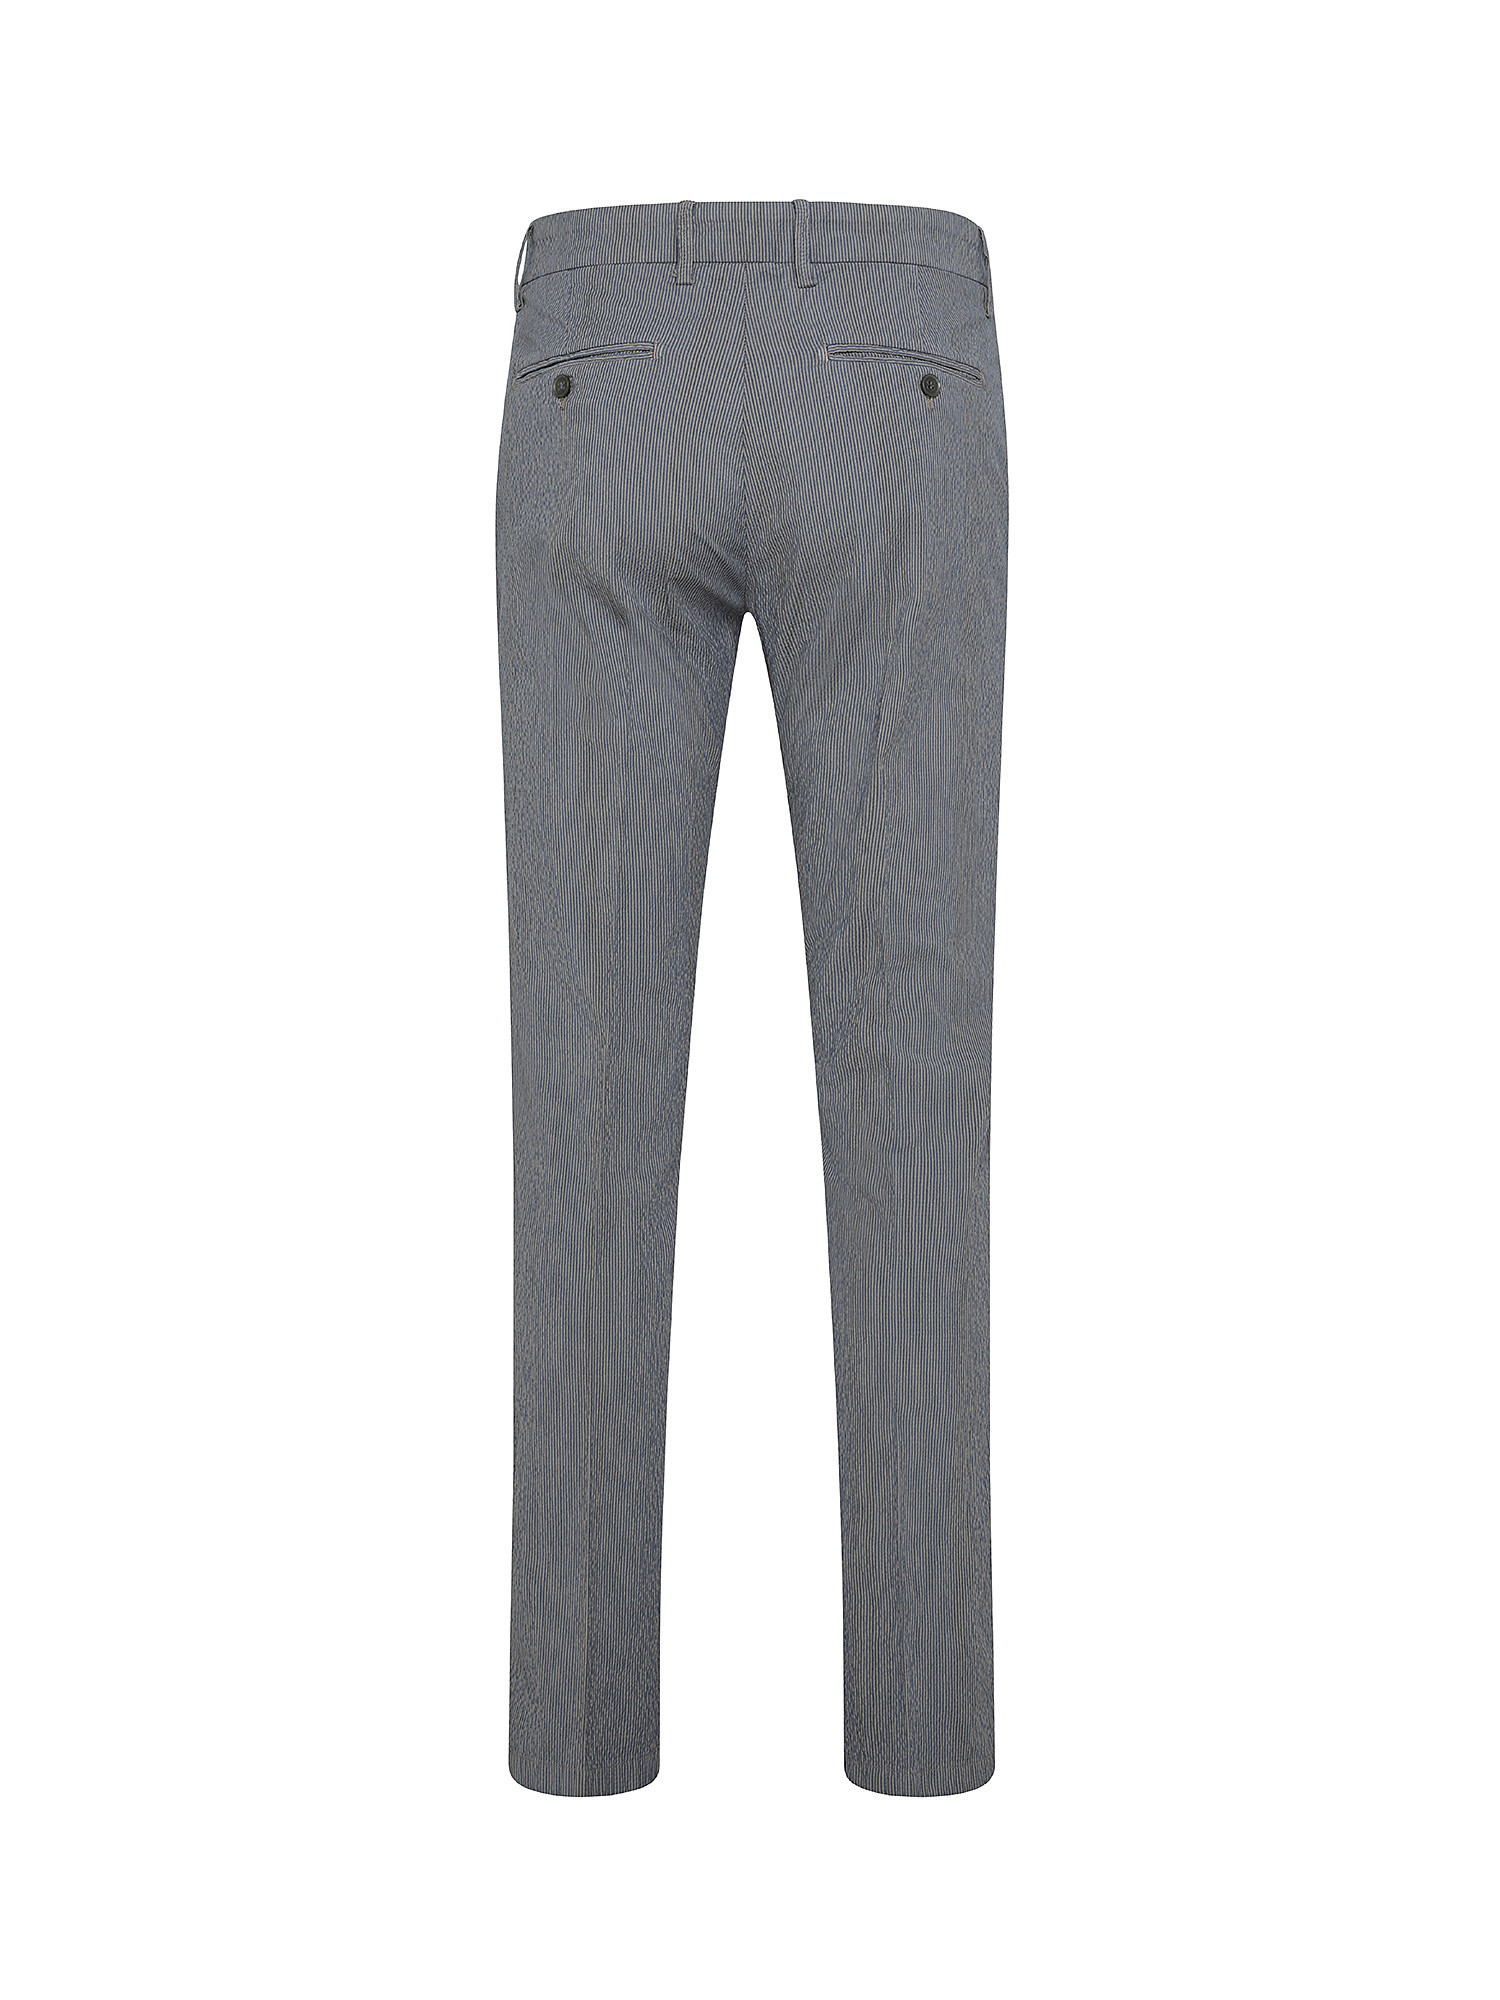 Pantalone chino, Grigio, large image number 1